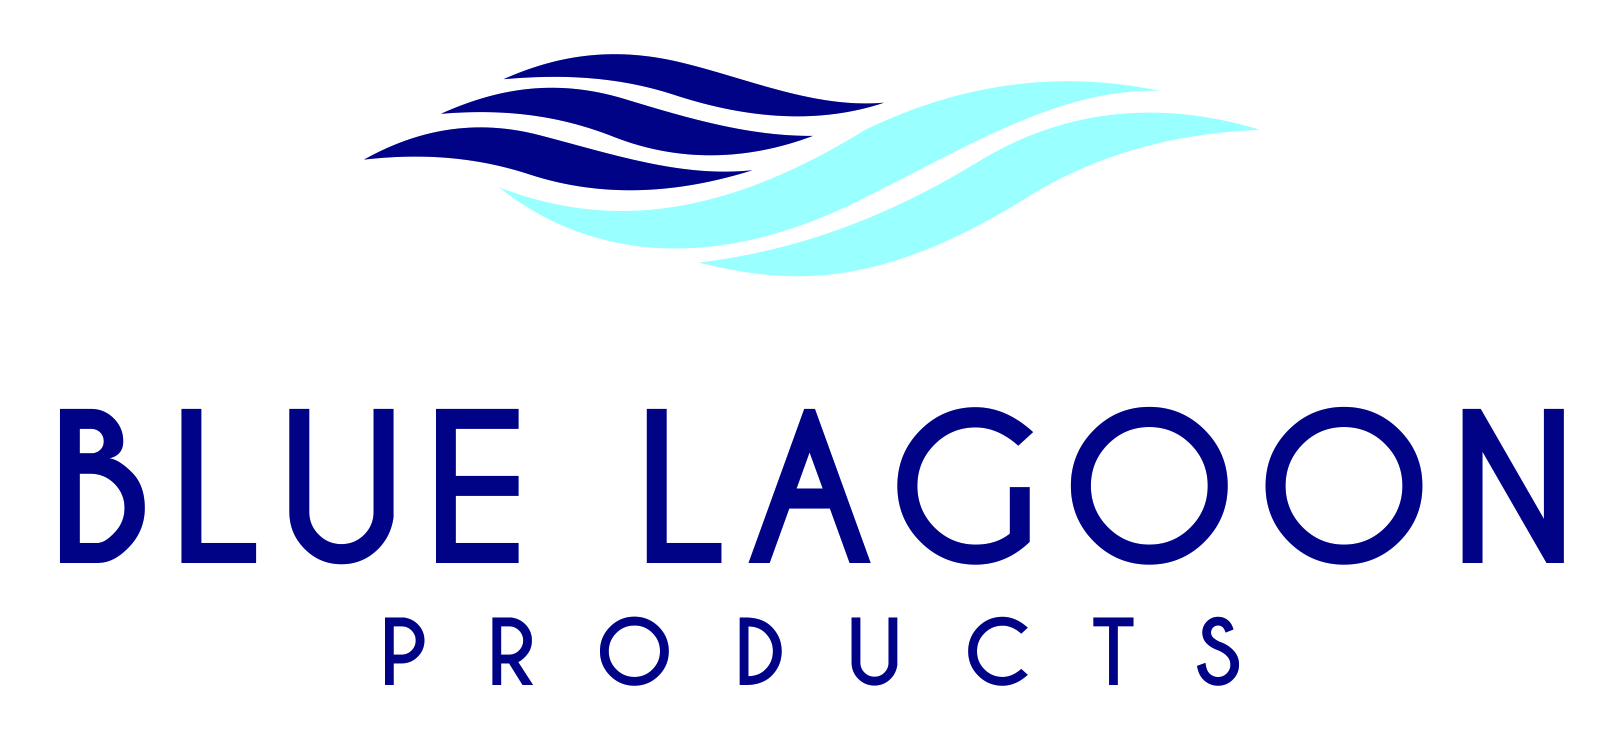 BLUE LAGOON PRODUCTS LOGO NO TAGLINE